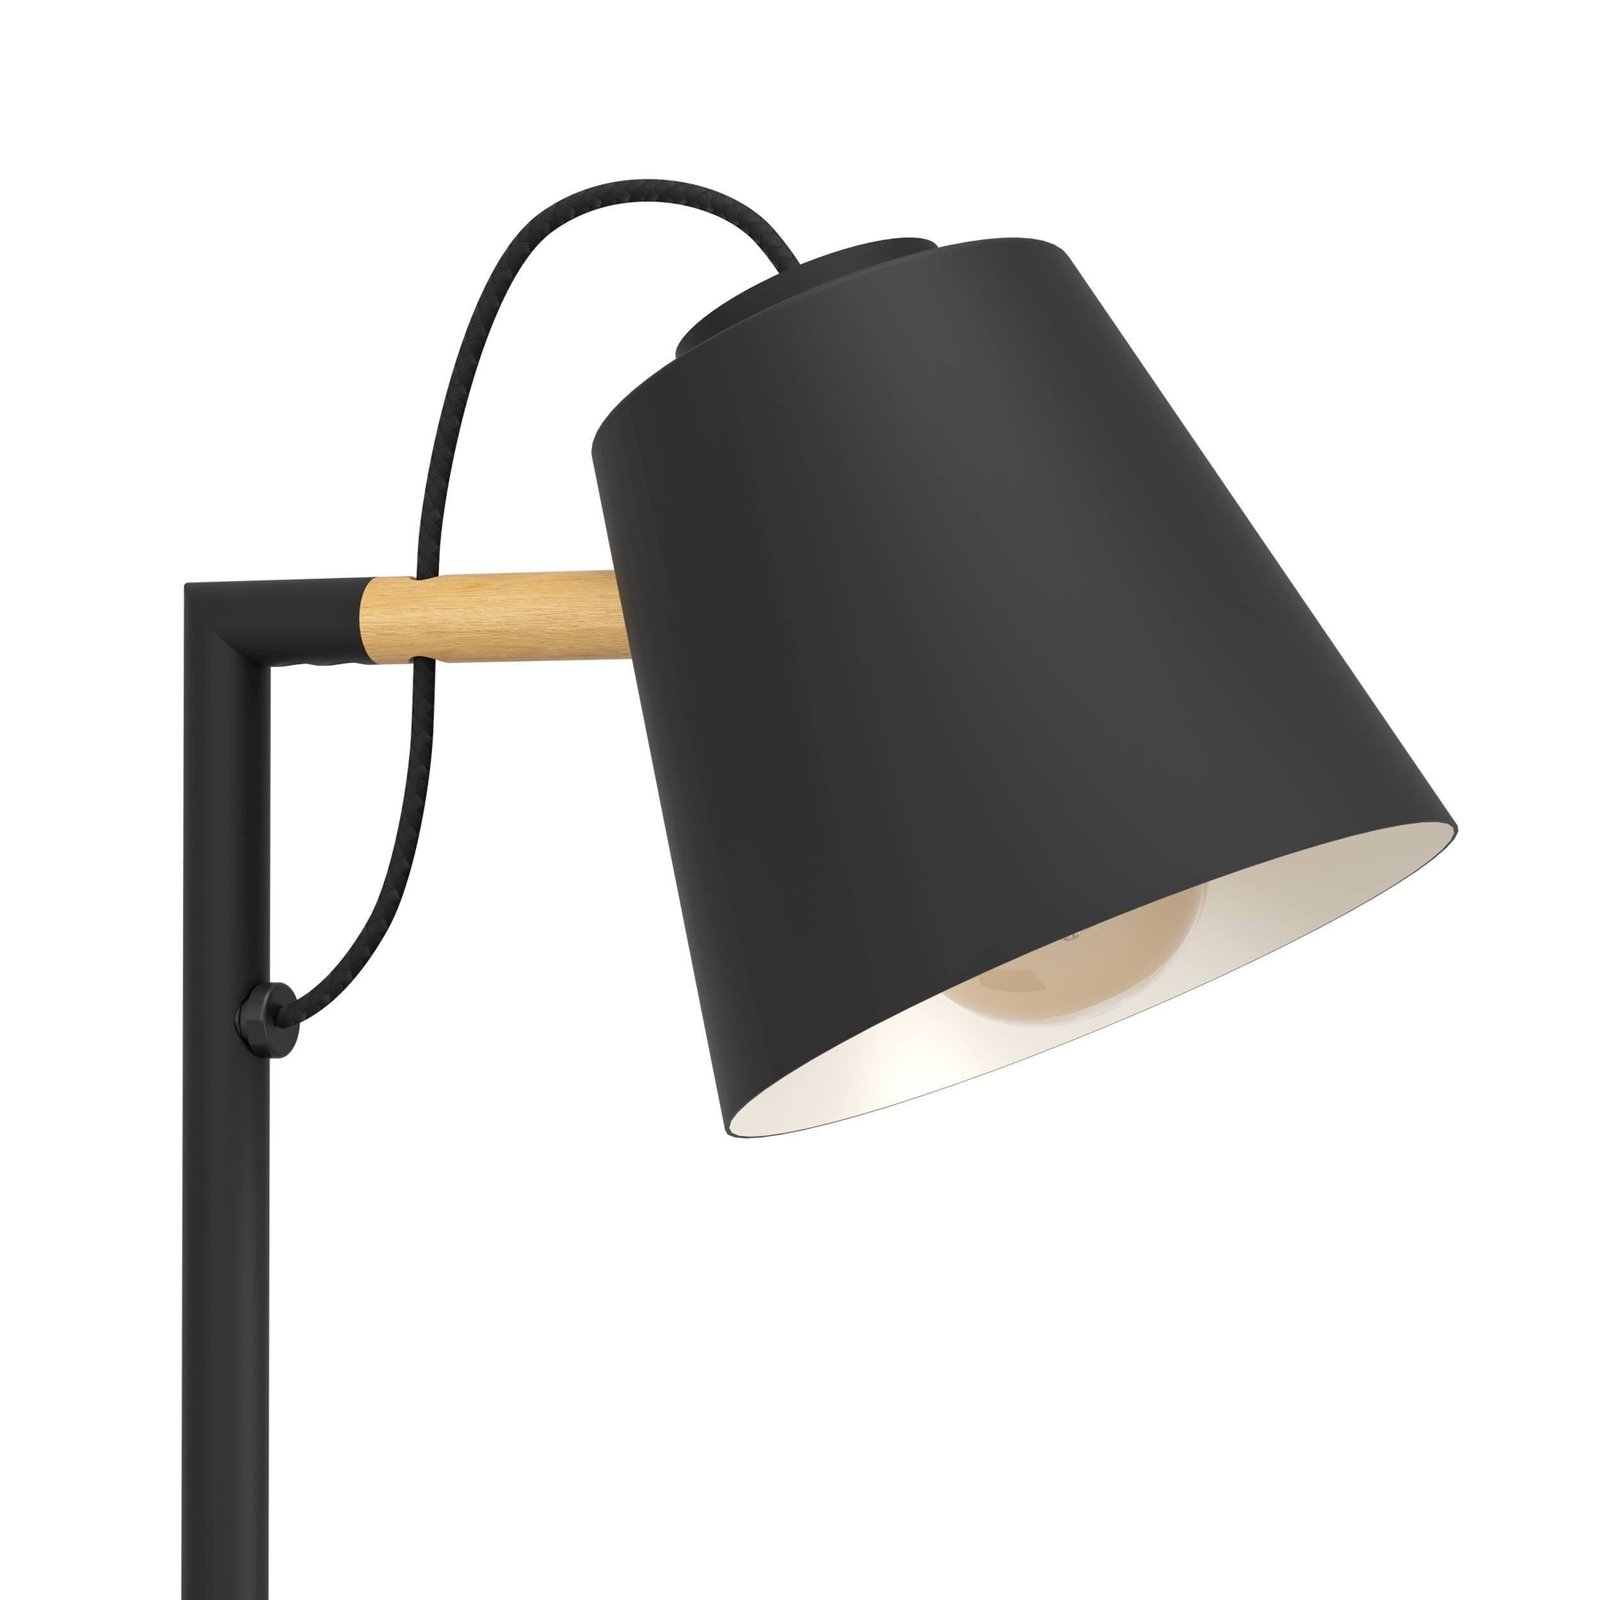 Lacey galda lampa, augstums 48,5 cm, melna, tērauds